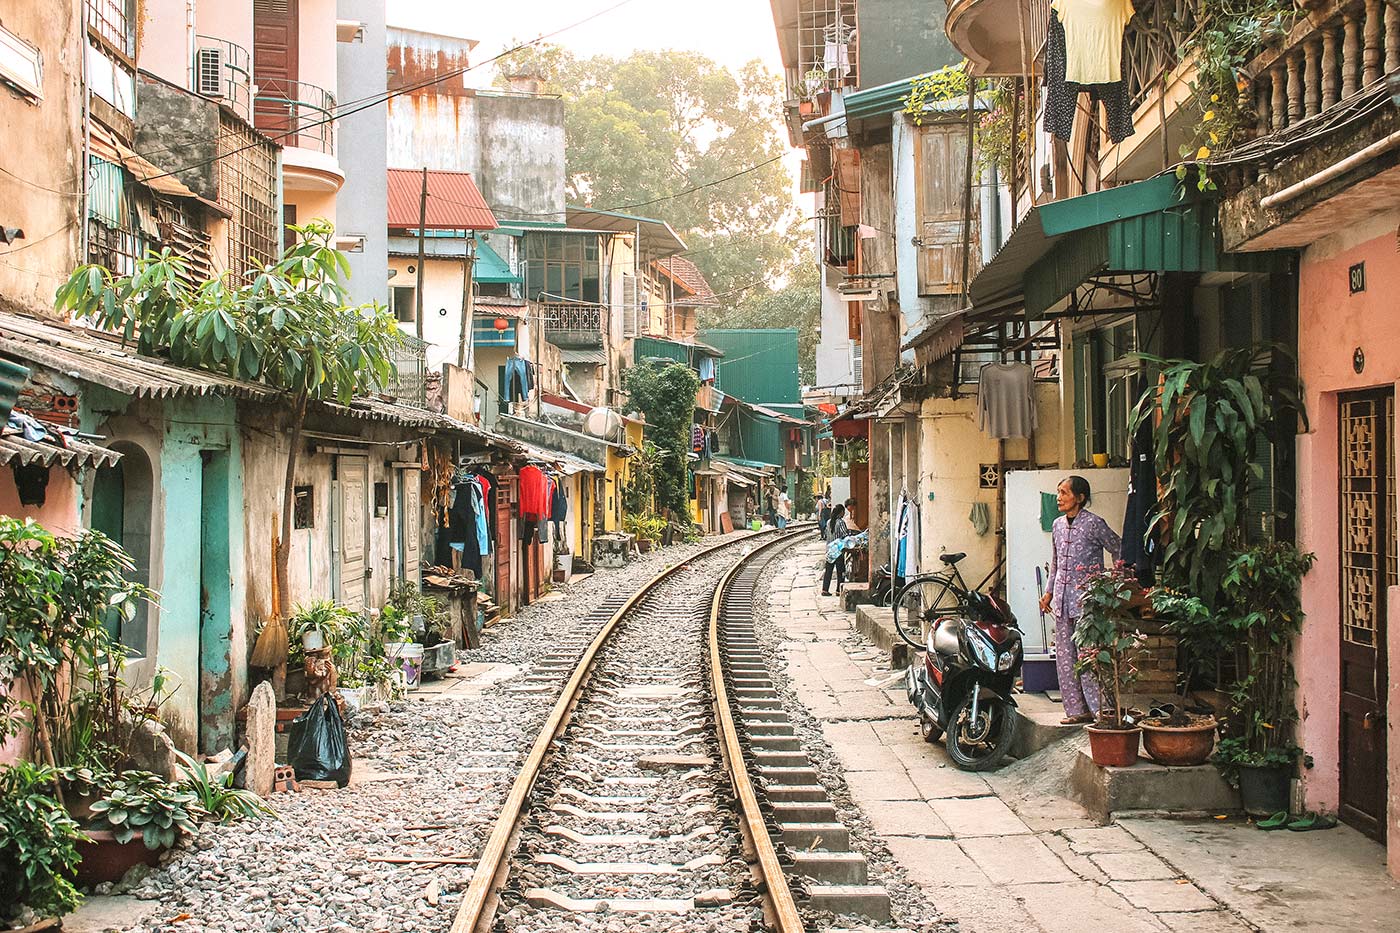 Hanoi Train Street / Rail Street